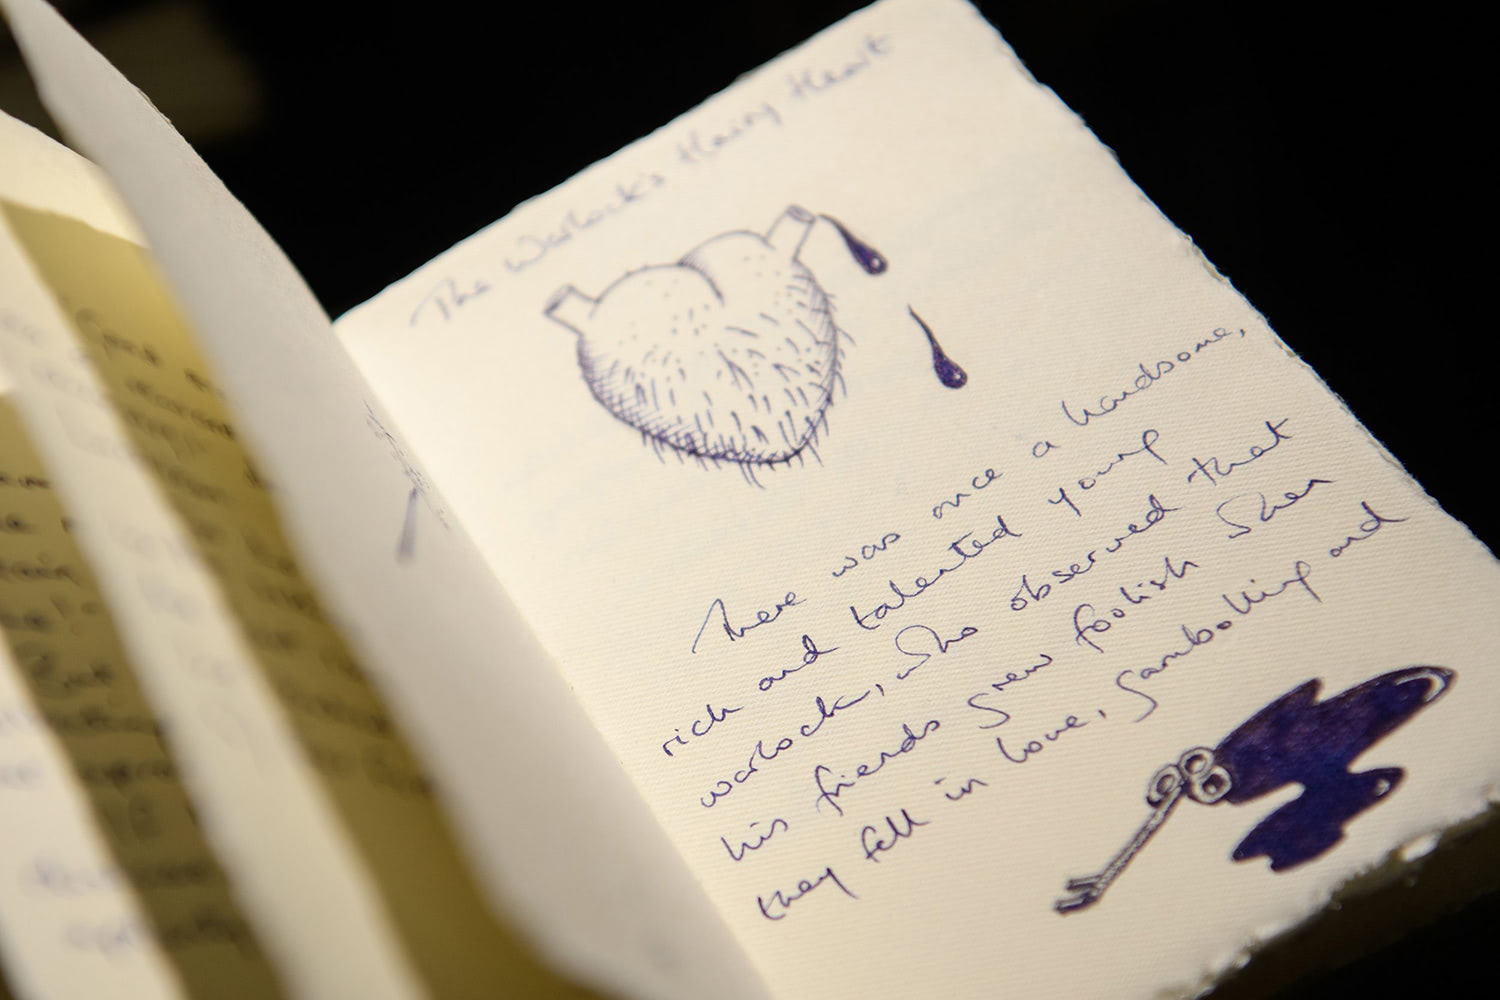 J.K. Rowling’s ‘Beedle the Bard’ manuscript